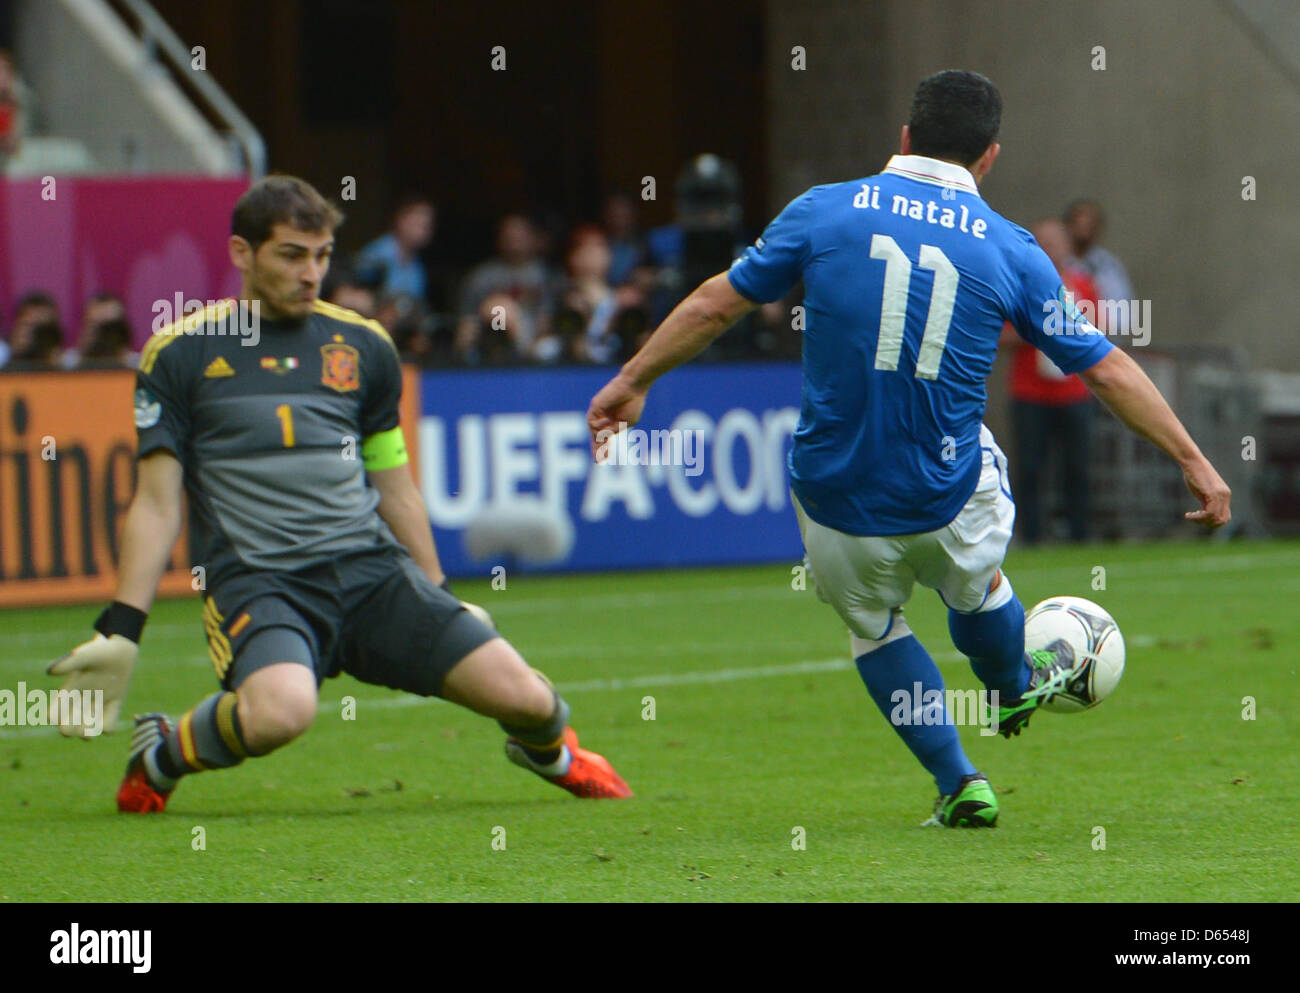 Antonio Di Natale.Italy S Antonio Di Natale R Scores The 1 0 Against Spain S Iker Stock Photo Alamy